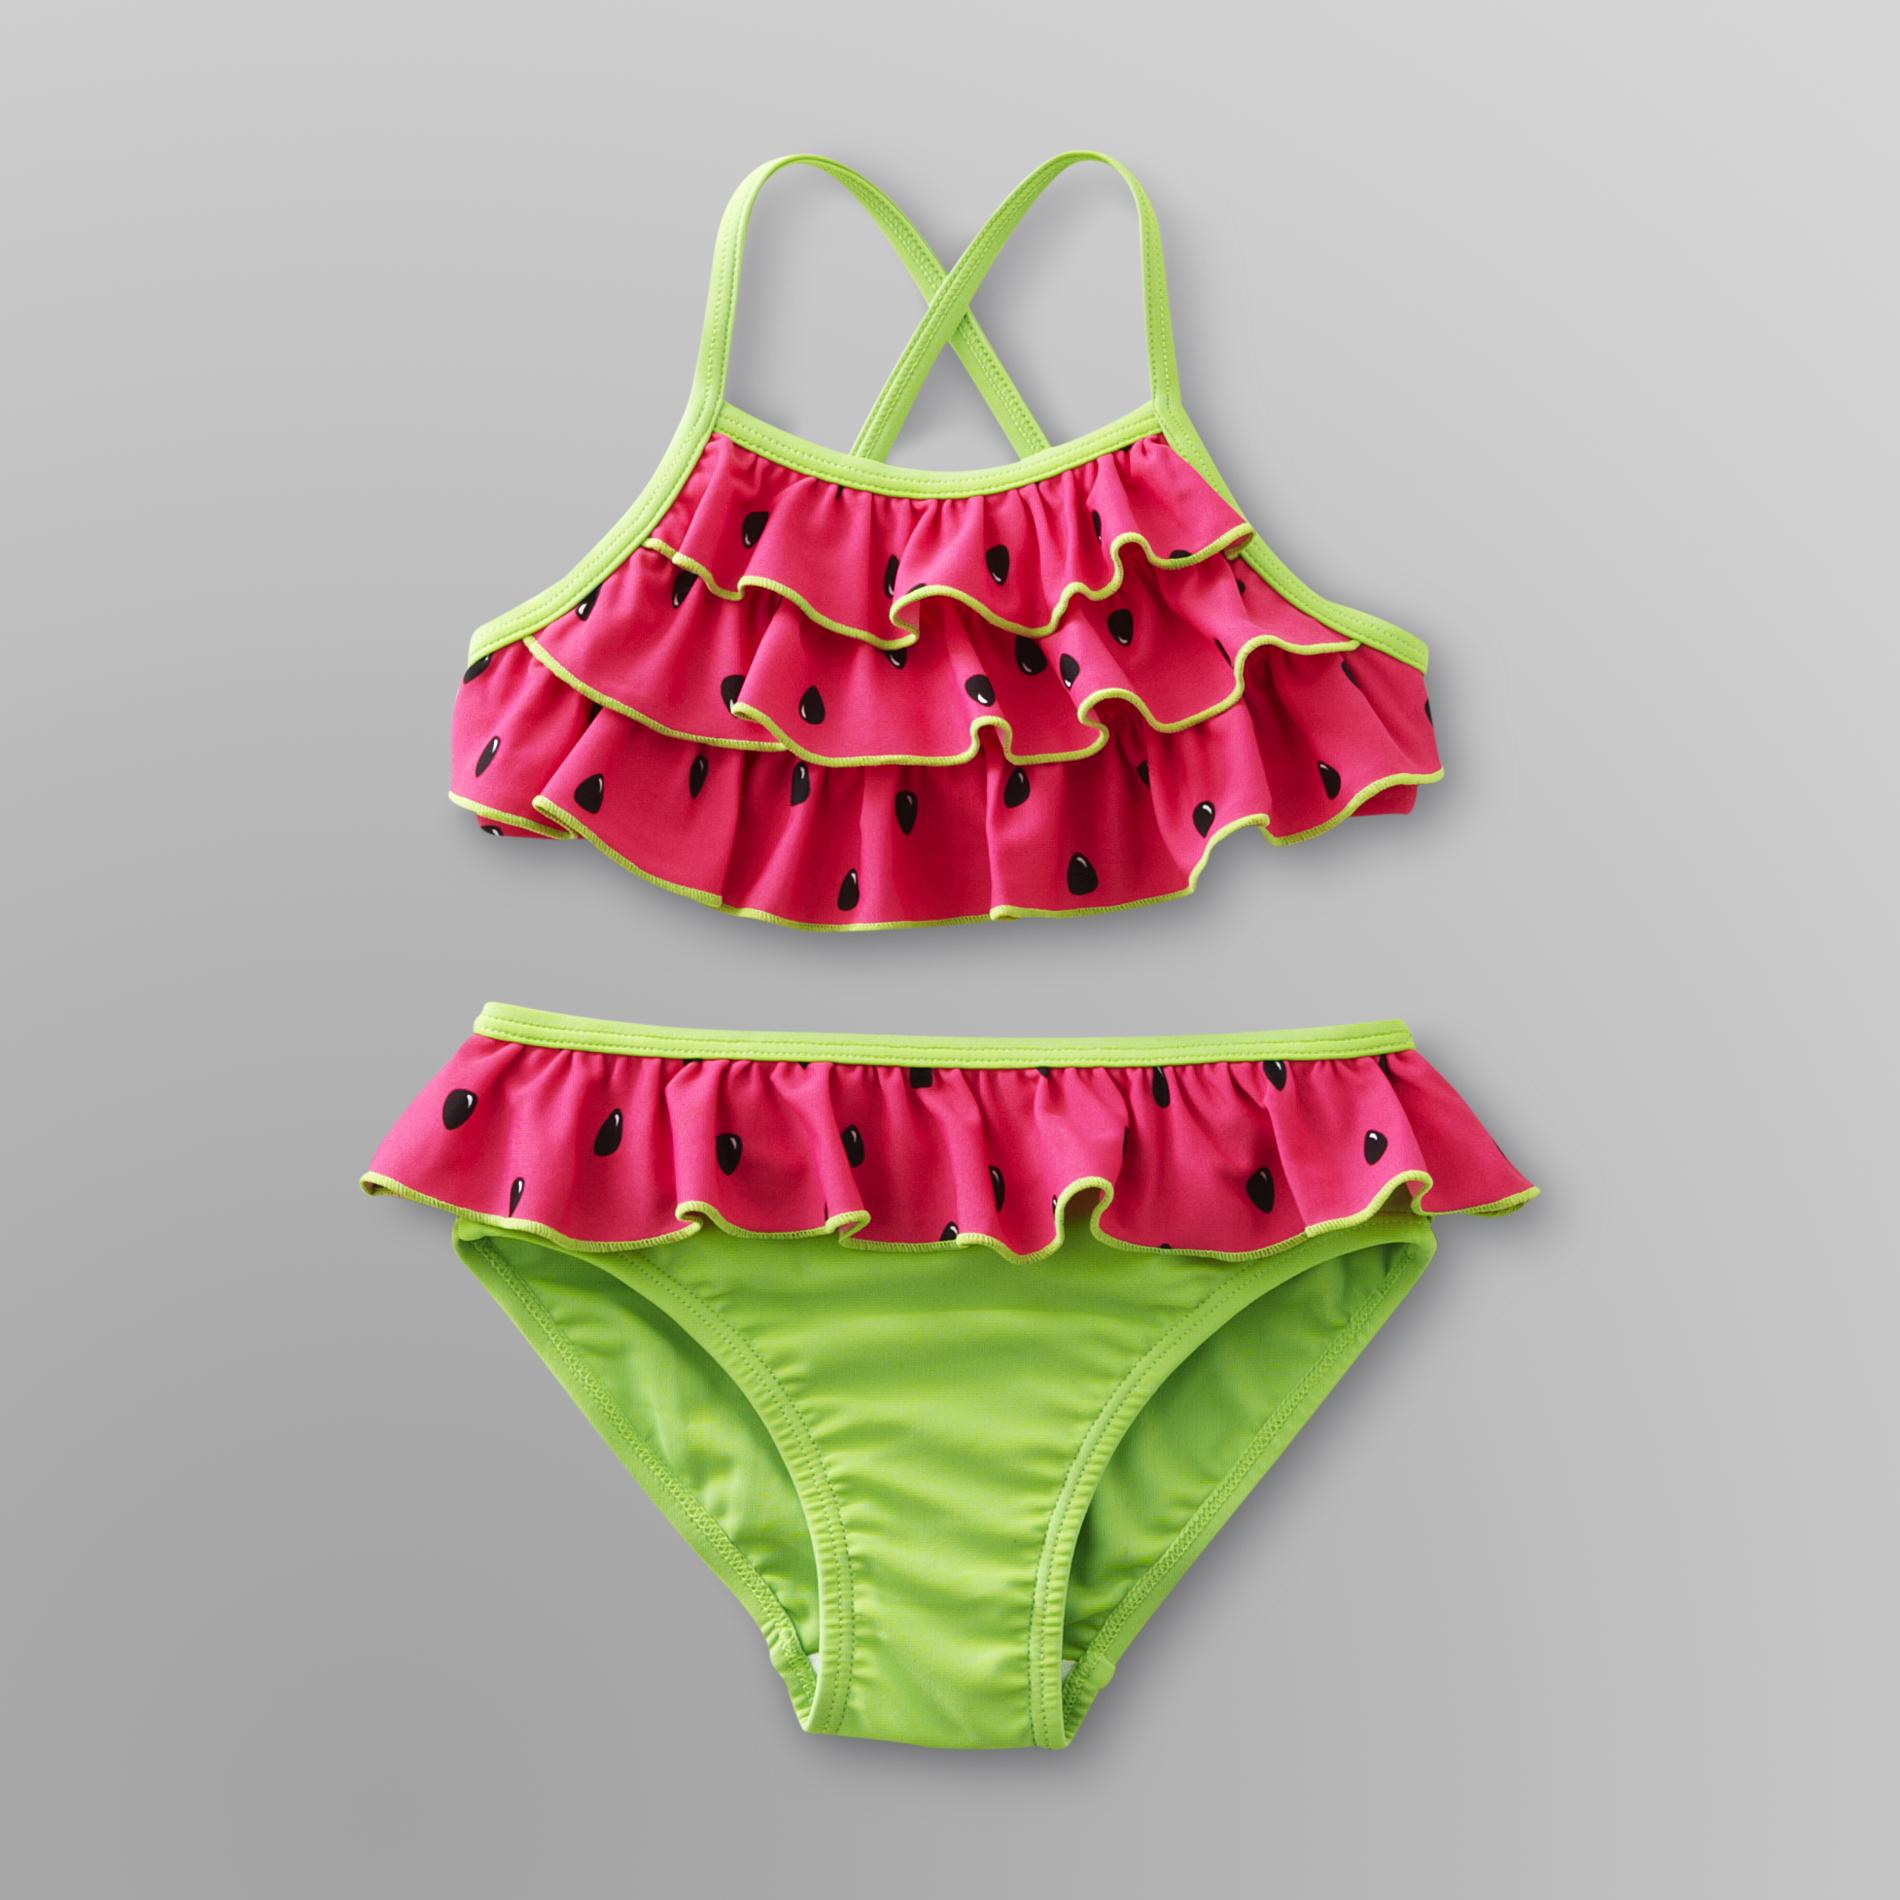 Joe Boxer Infant & Toddler Girl's Bikini - Watermelon